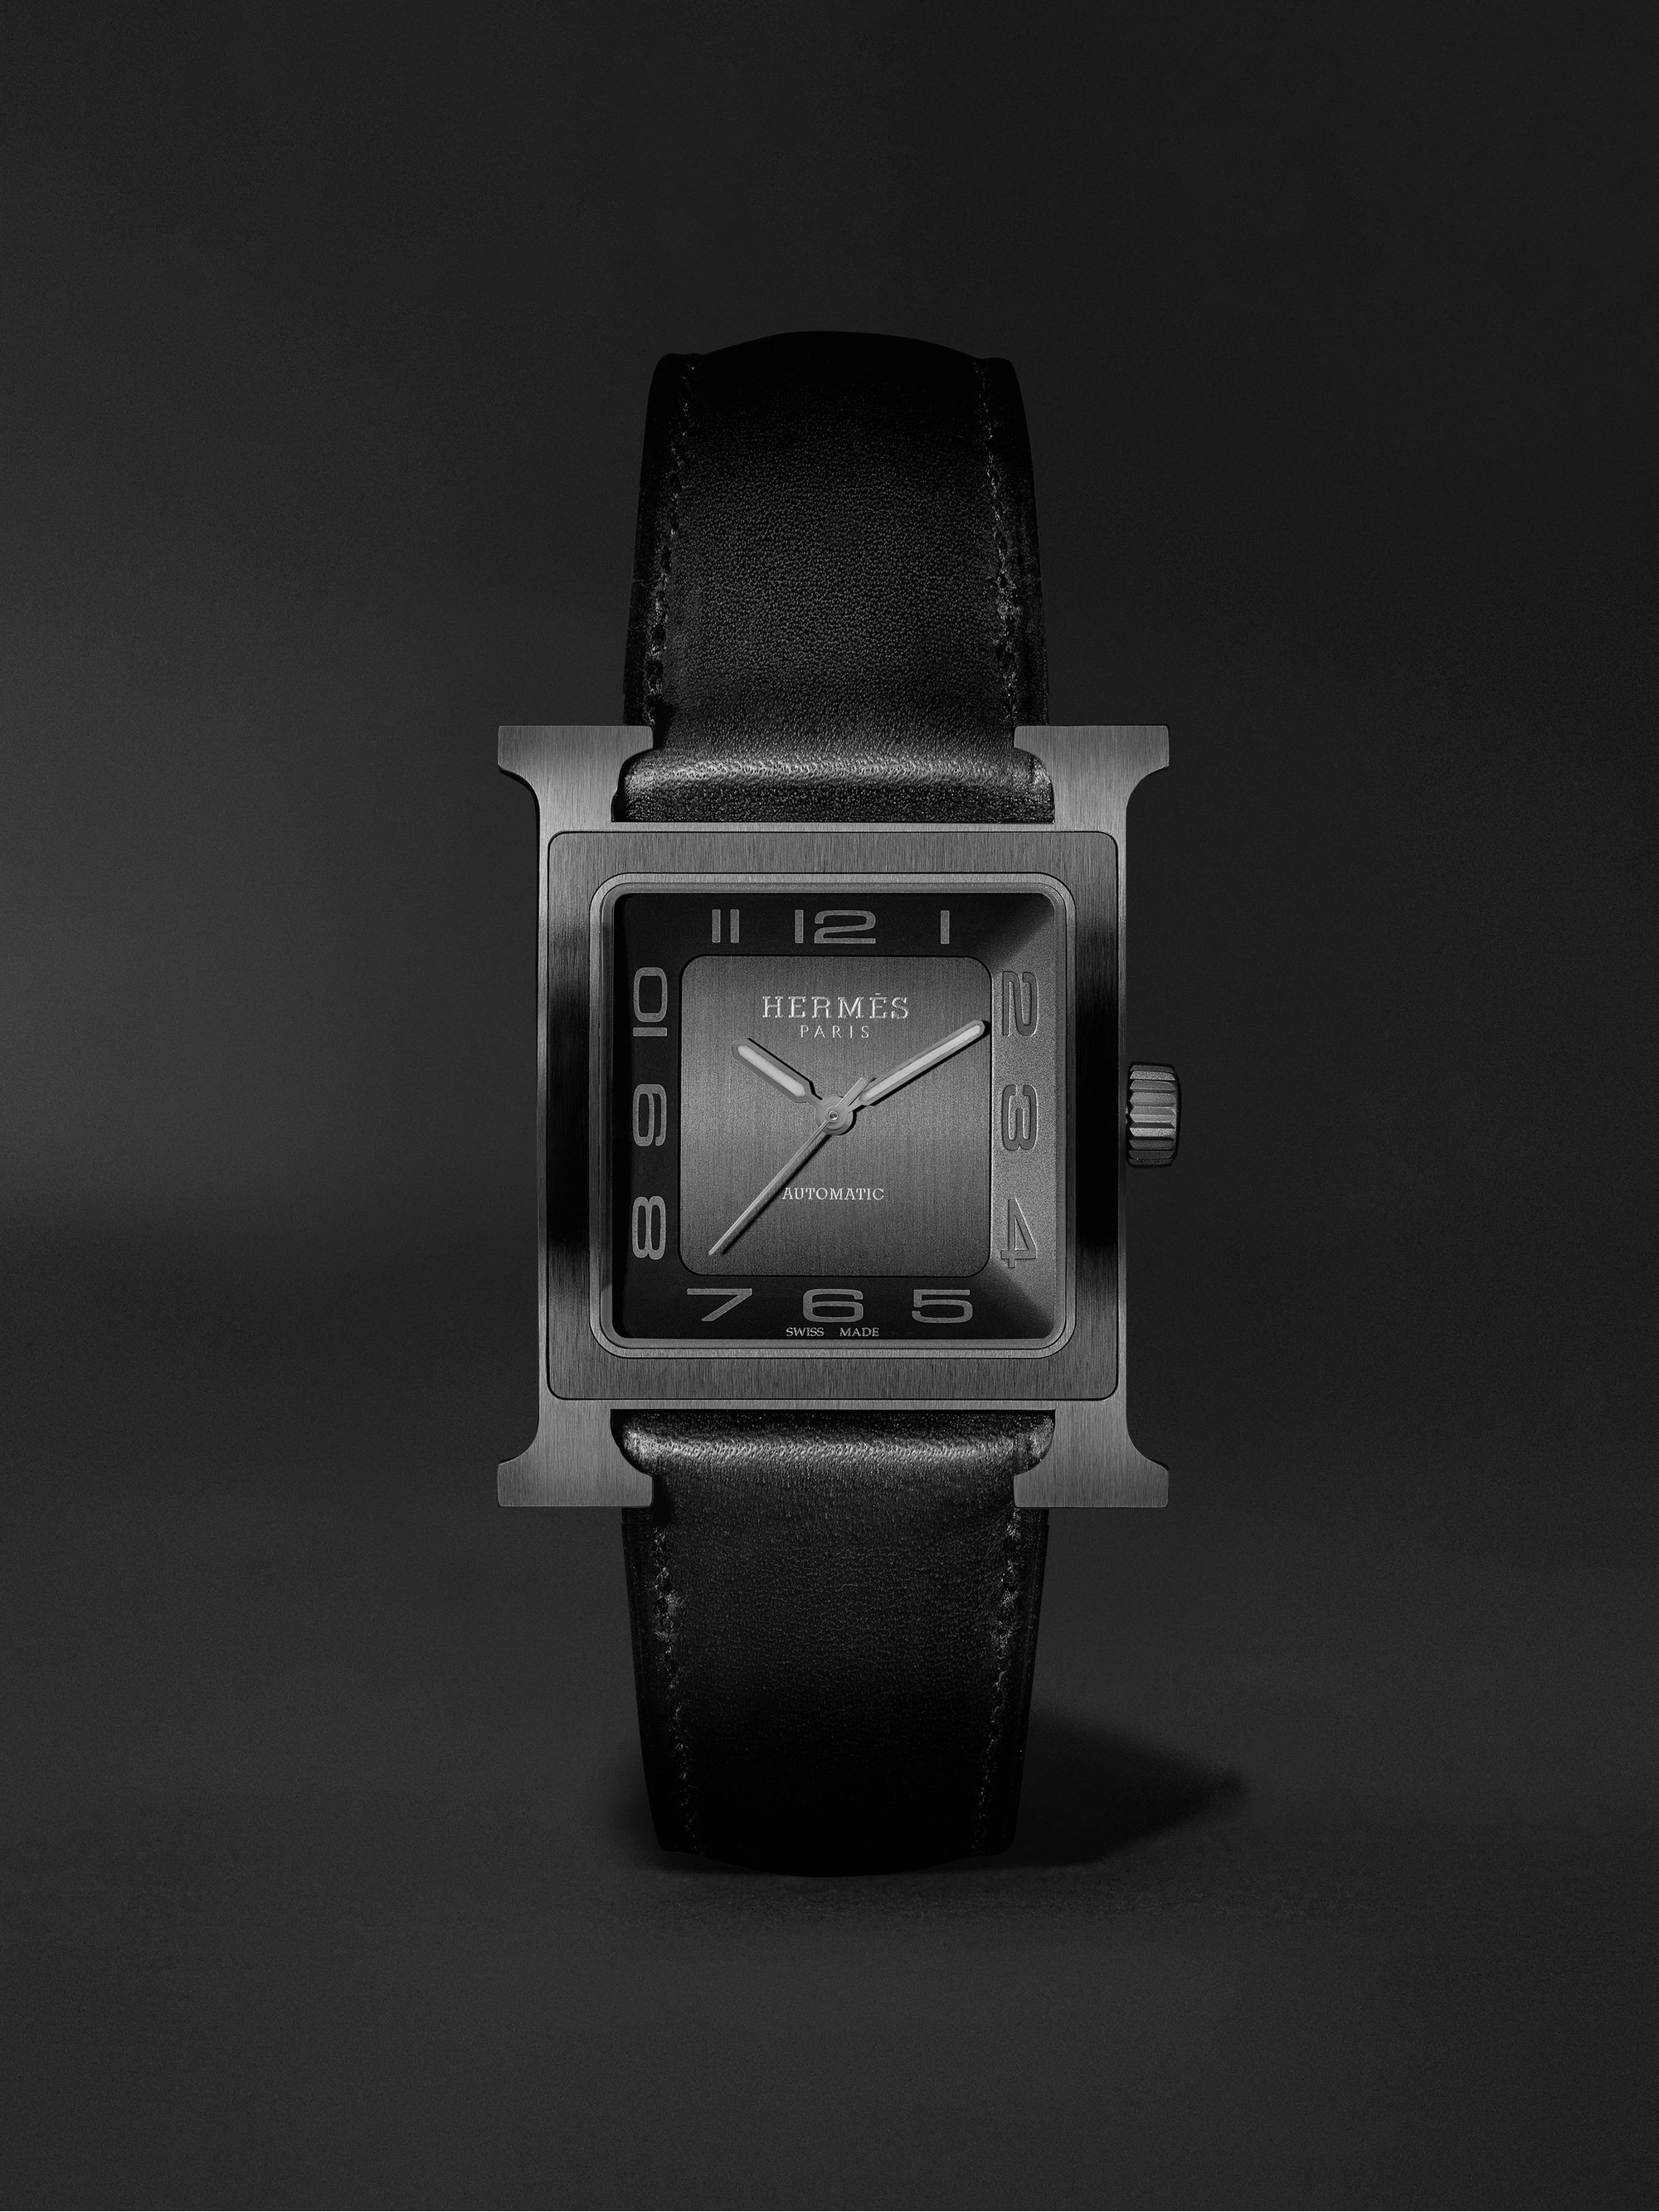 HERMÈS TIMEPIECES Heure H Automatic 34mm Titanium Watch, Ref. No. W054131WW00